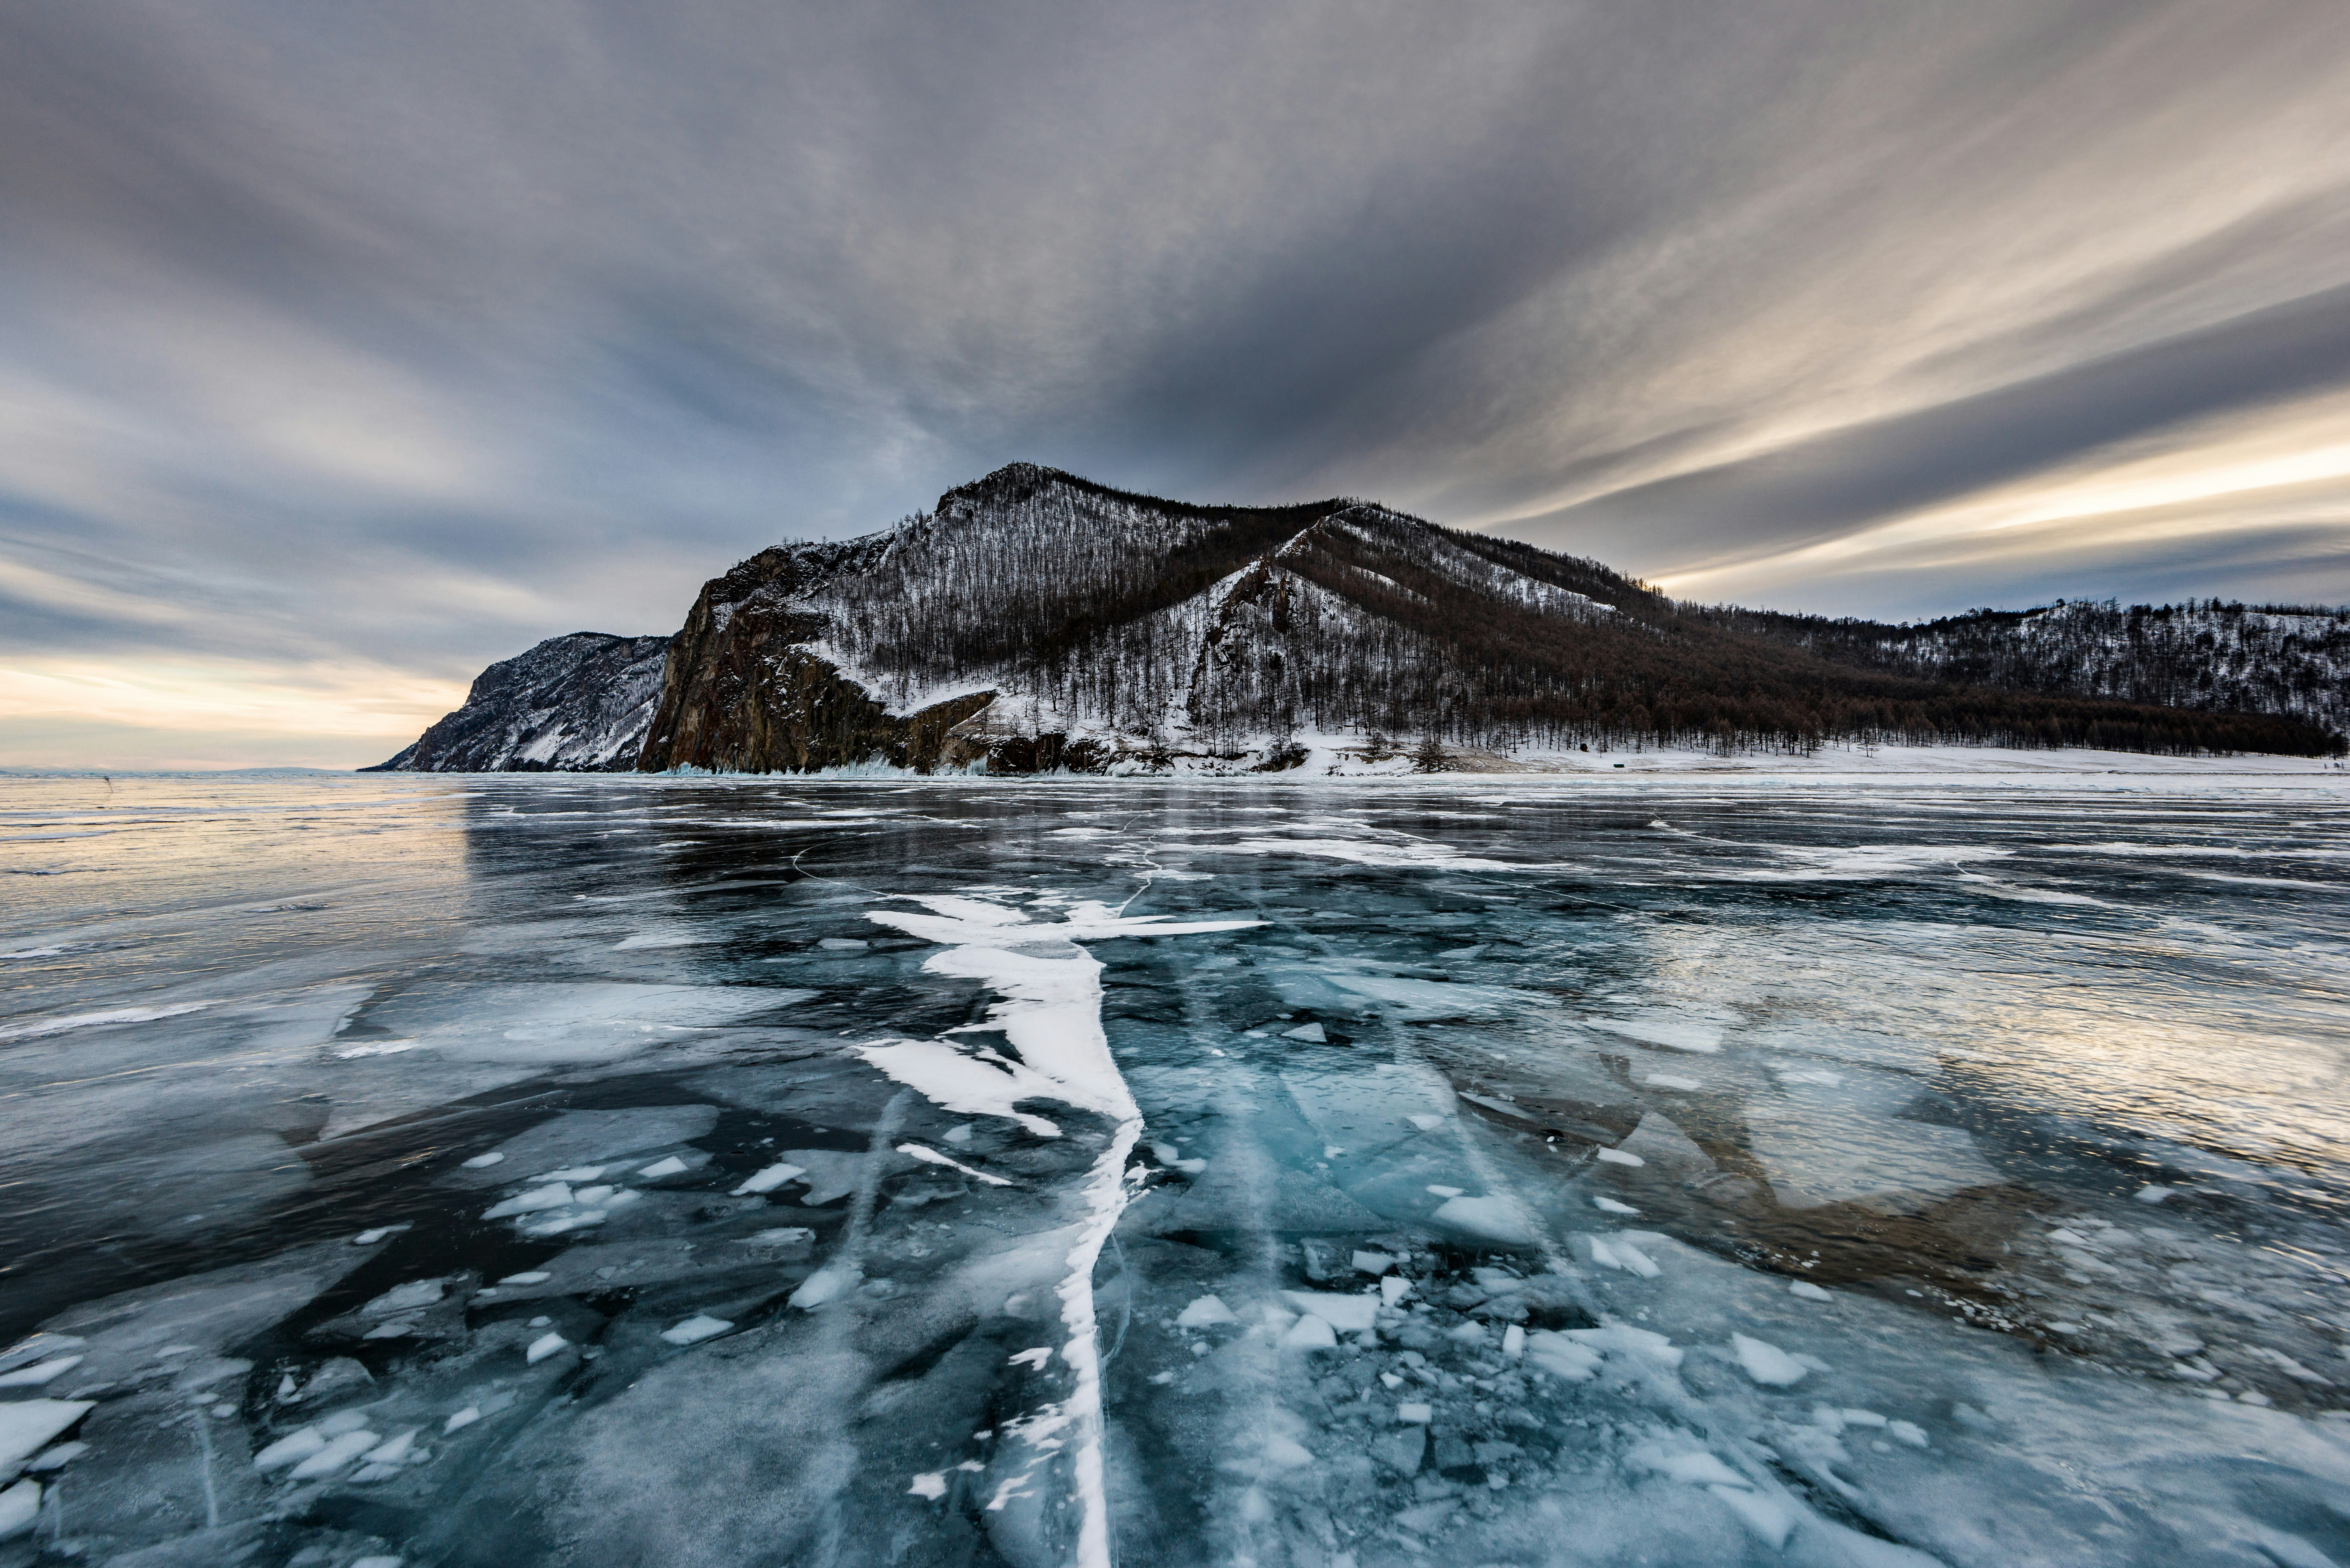 melting ice on water near gray mountain at daytime